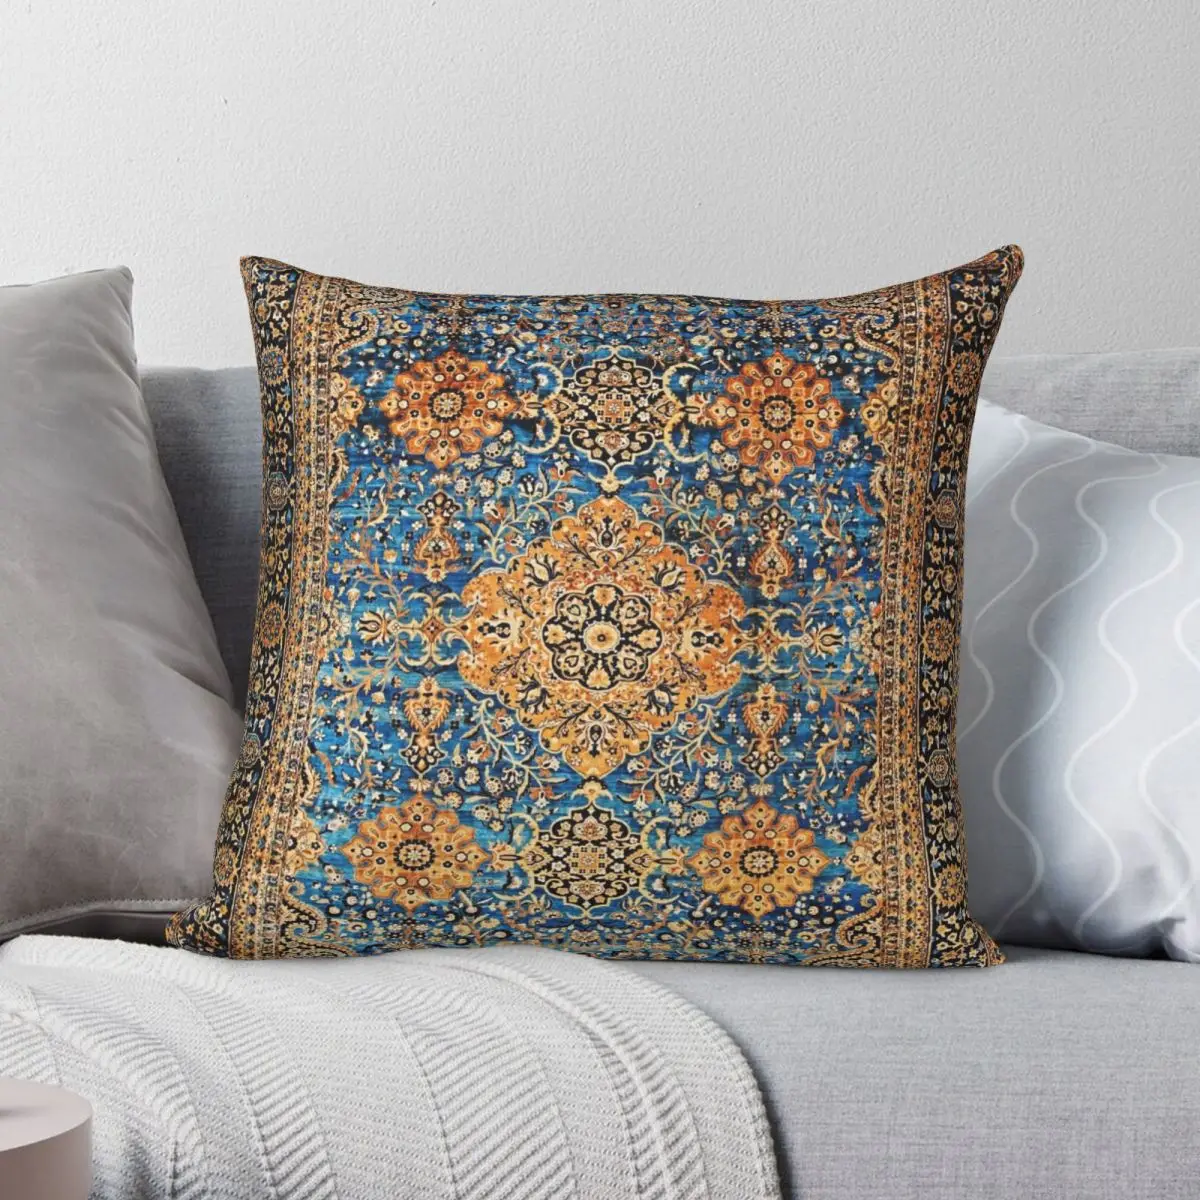 

Античный персидский ковер Kirman, наволочка, полиэстер, лен, бархат, узор, молния, Декор, чехлы на подушки для дома